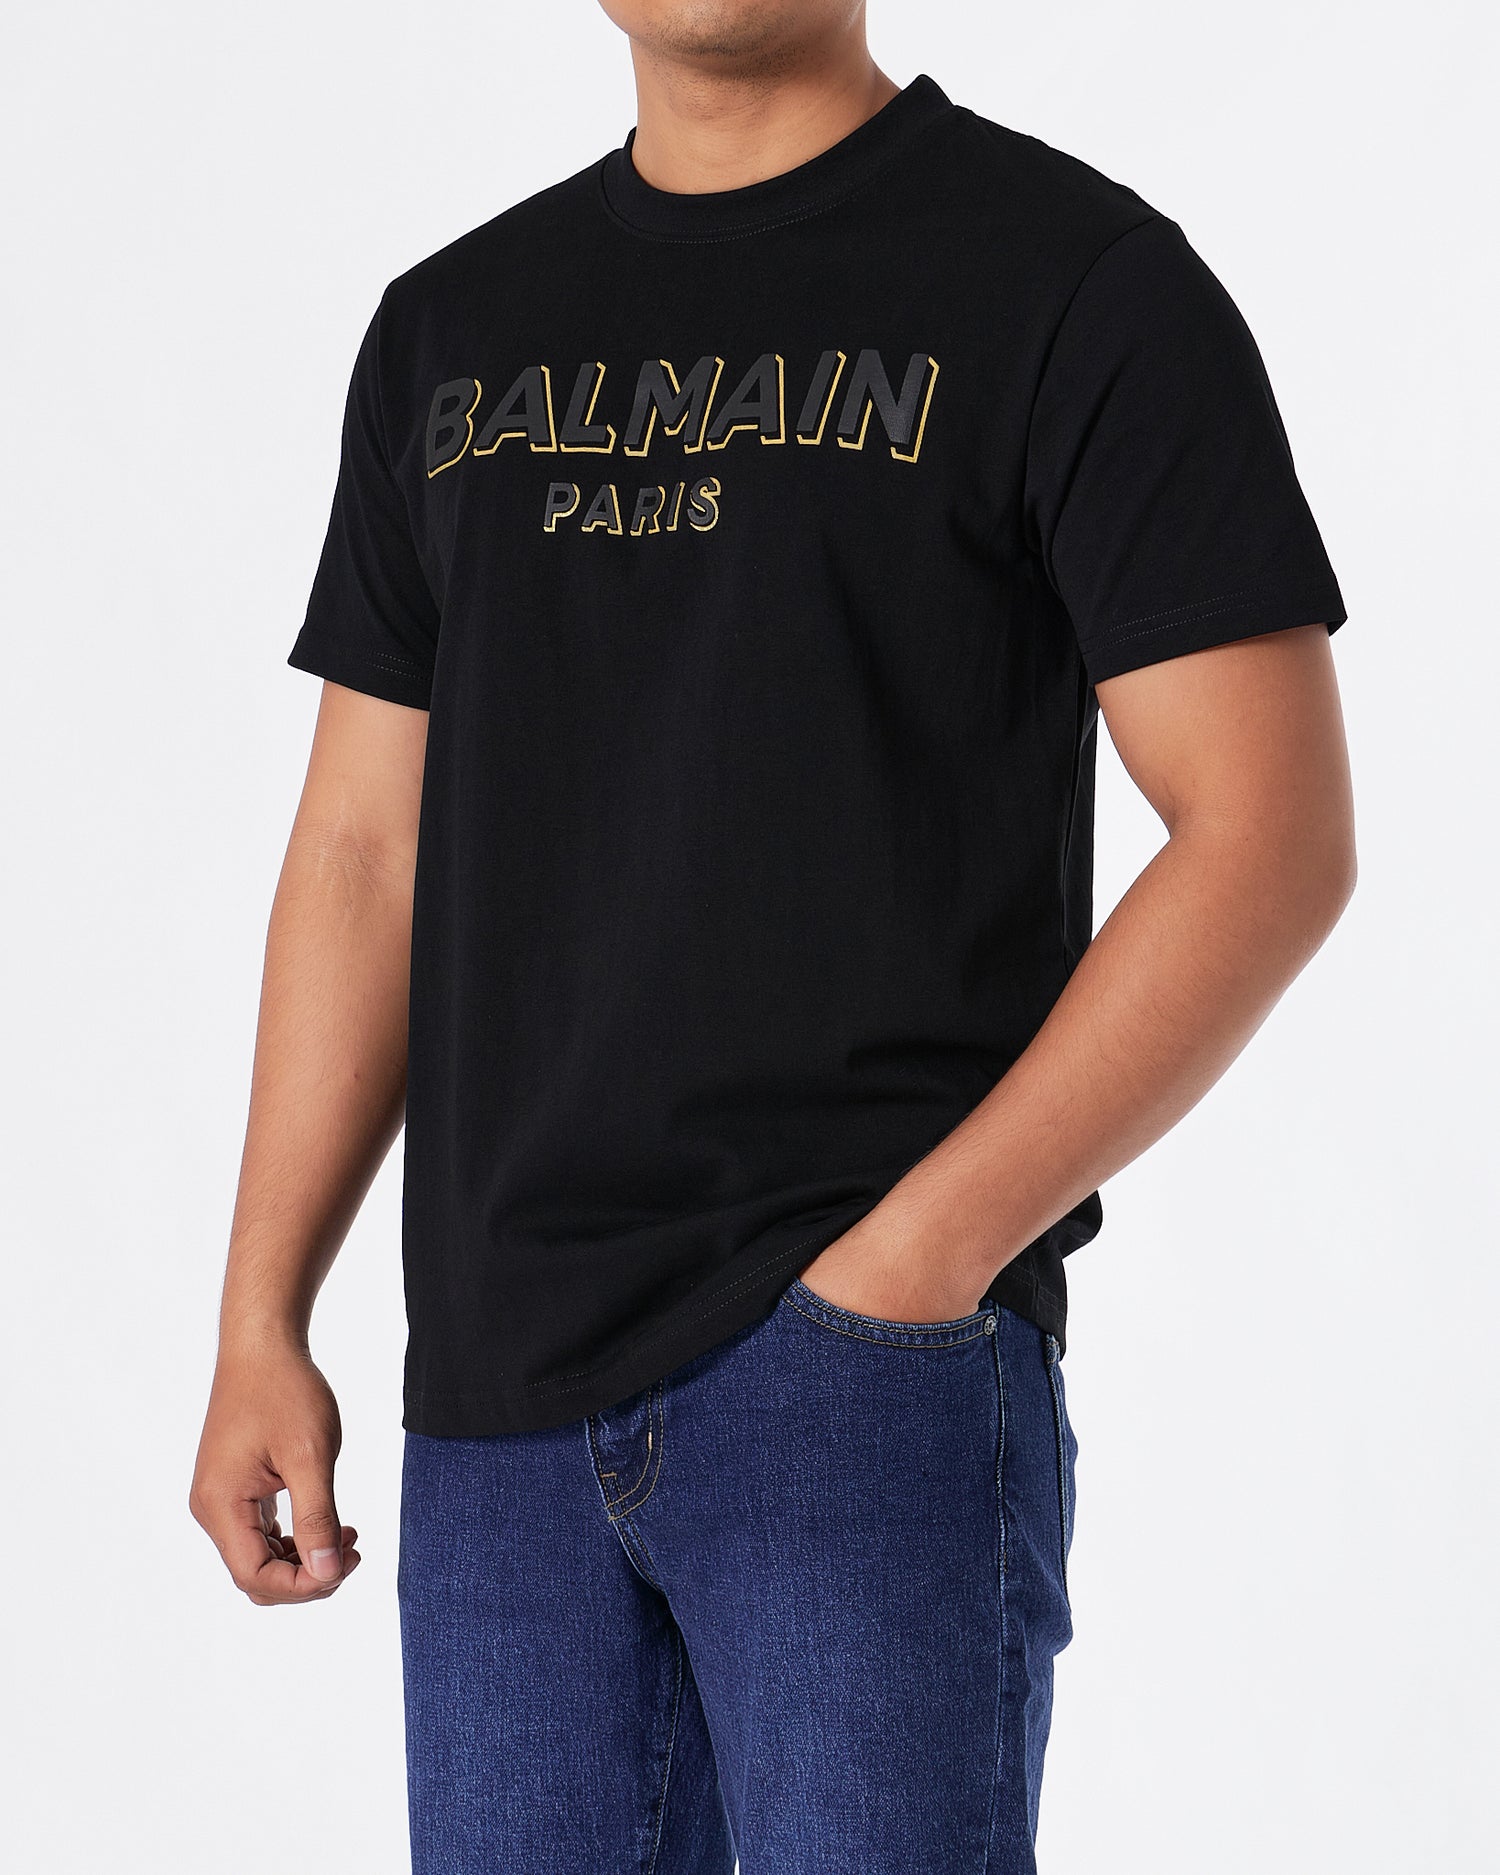 BAM Paris Logo Printed Men Black T-Shirt 22.50